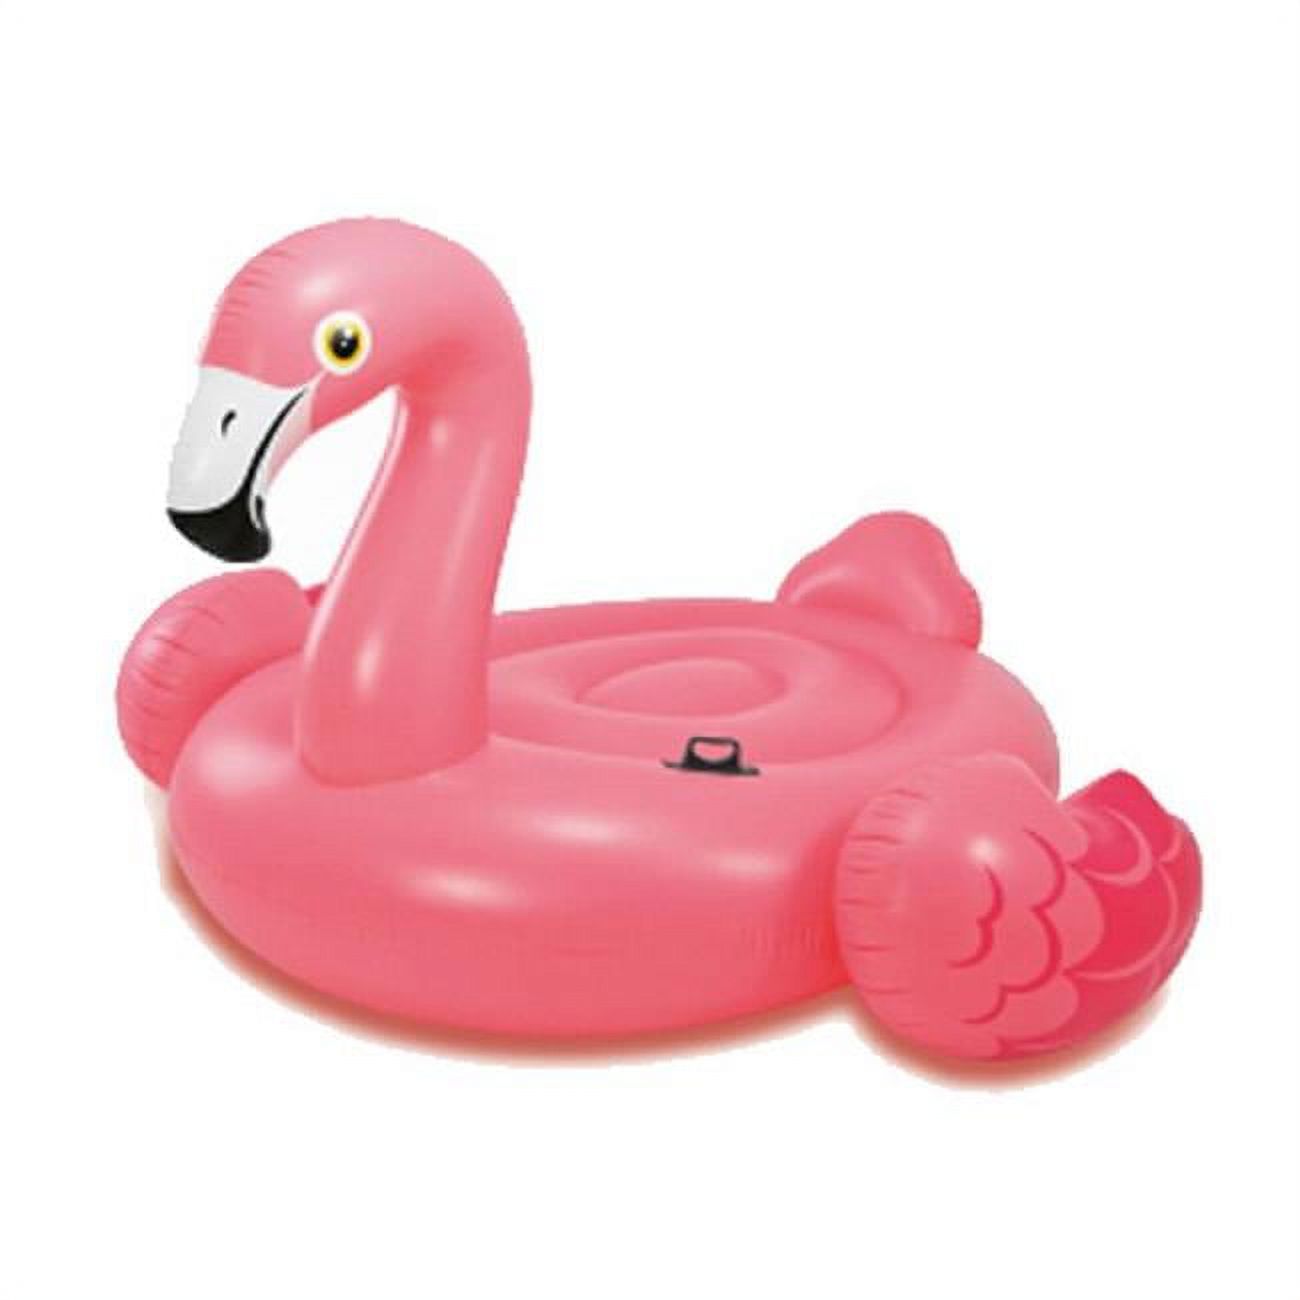 Intex Pink Vinyl Inflatable Mega Flamingo Island Pool Float - image 1 of 4